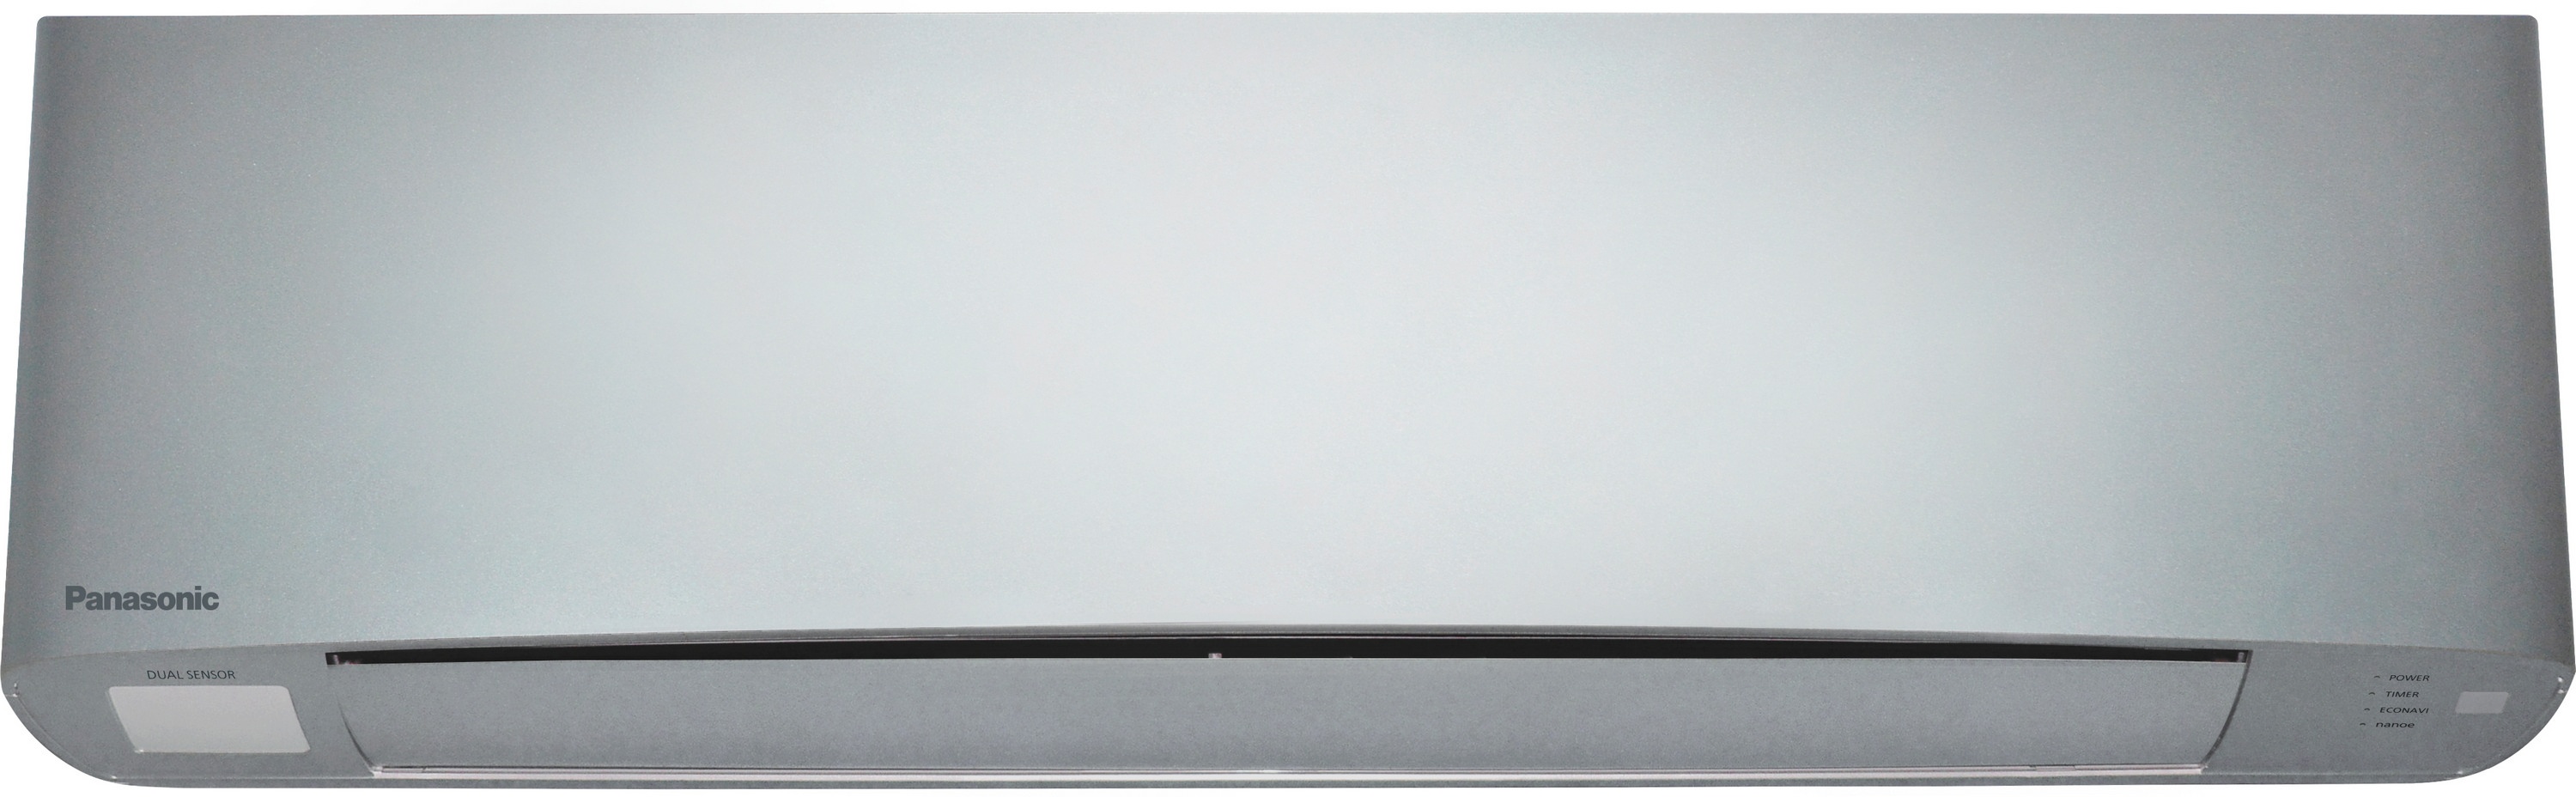 Внутренний блок мультисплит-системы Panasonic Flagship Silver CS-XZ20TKEW цена 34999.00 грн - фотография 2